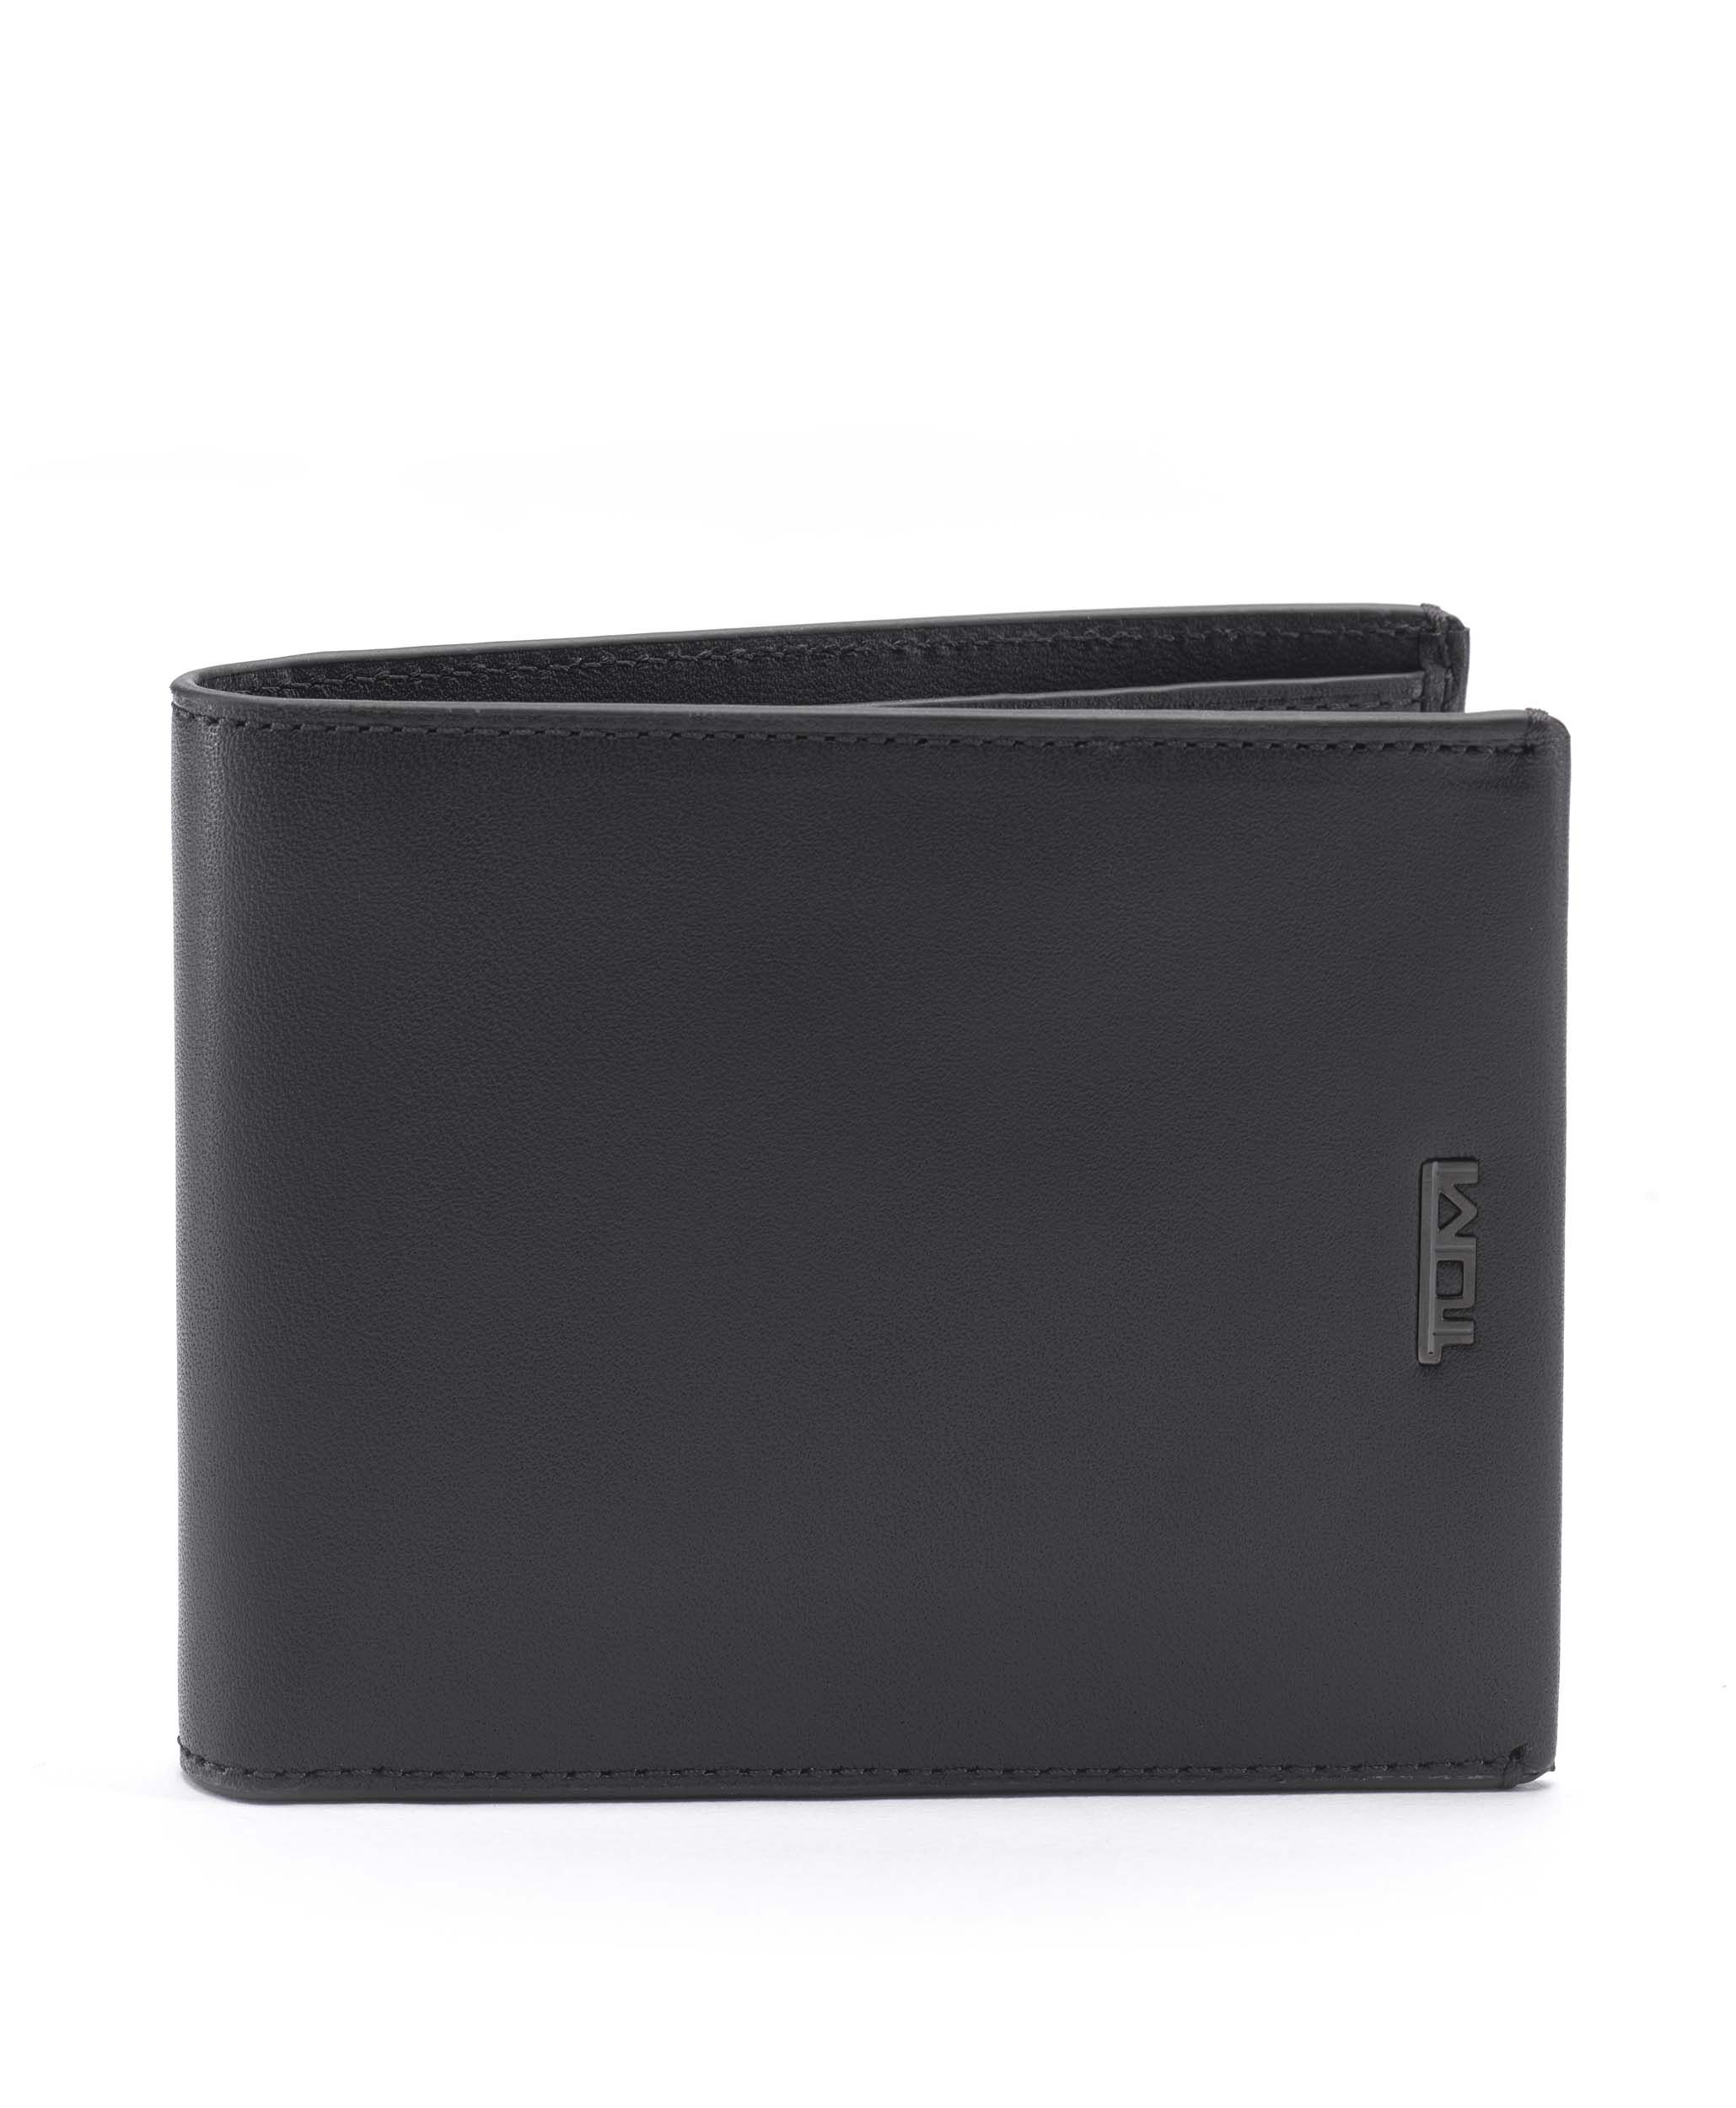 Custom Tooled Leather Wallet voeg uw logo toe! Tassen & portemonnees Portemonnees & Geldclips Portemonnees 